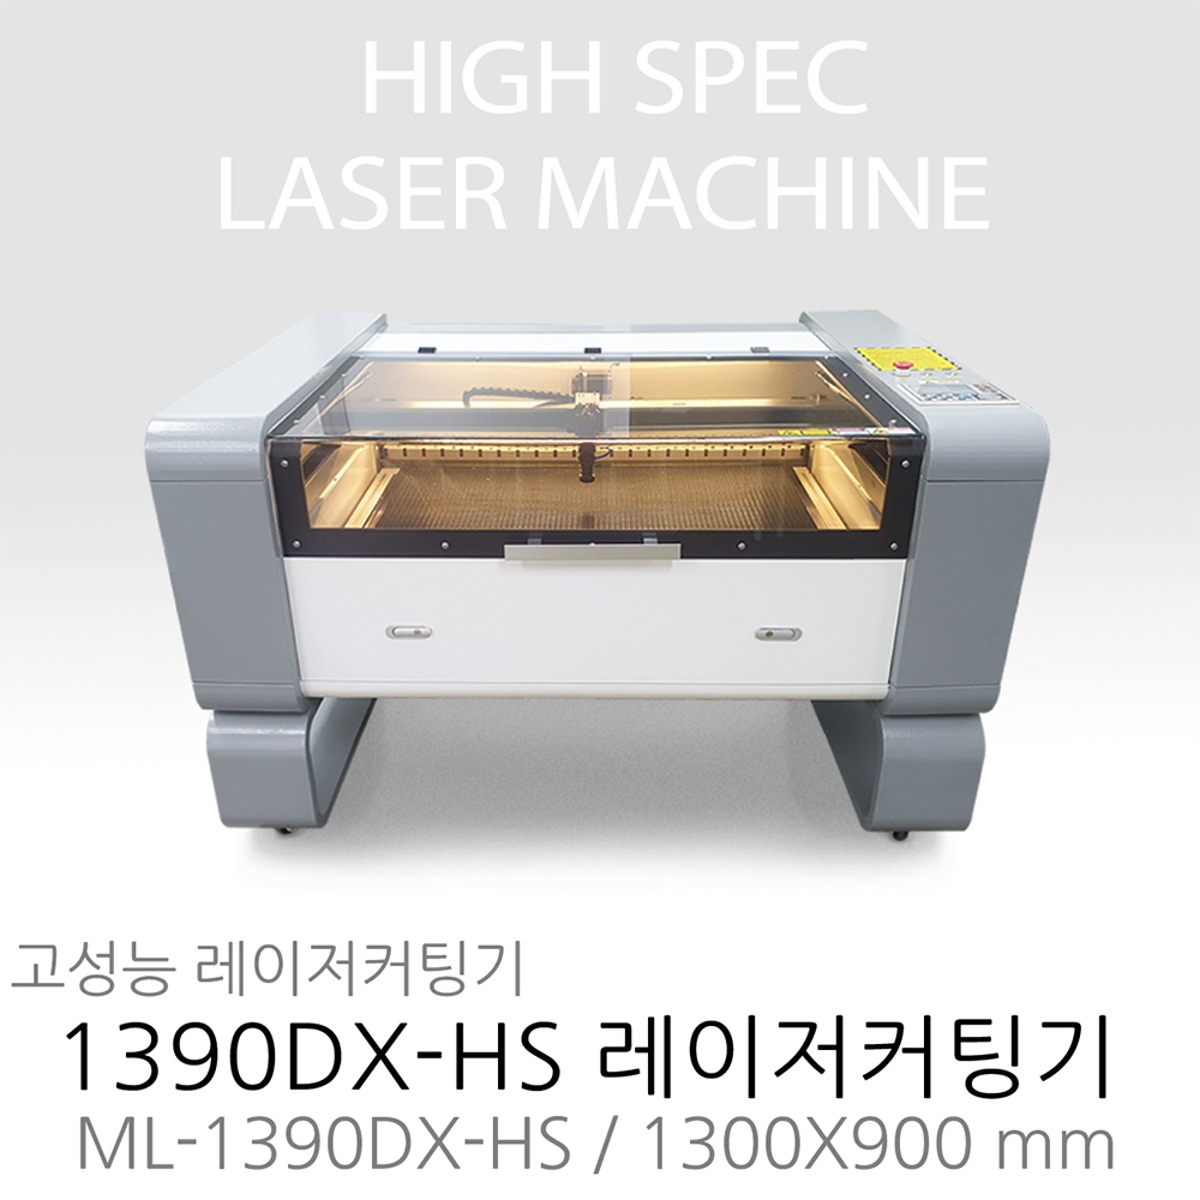 1390DX-HS 고성능 레이저 커팅기 (가격문의)